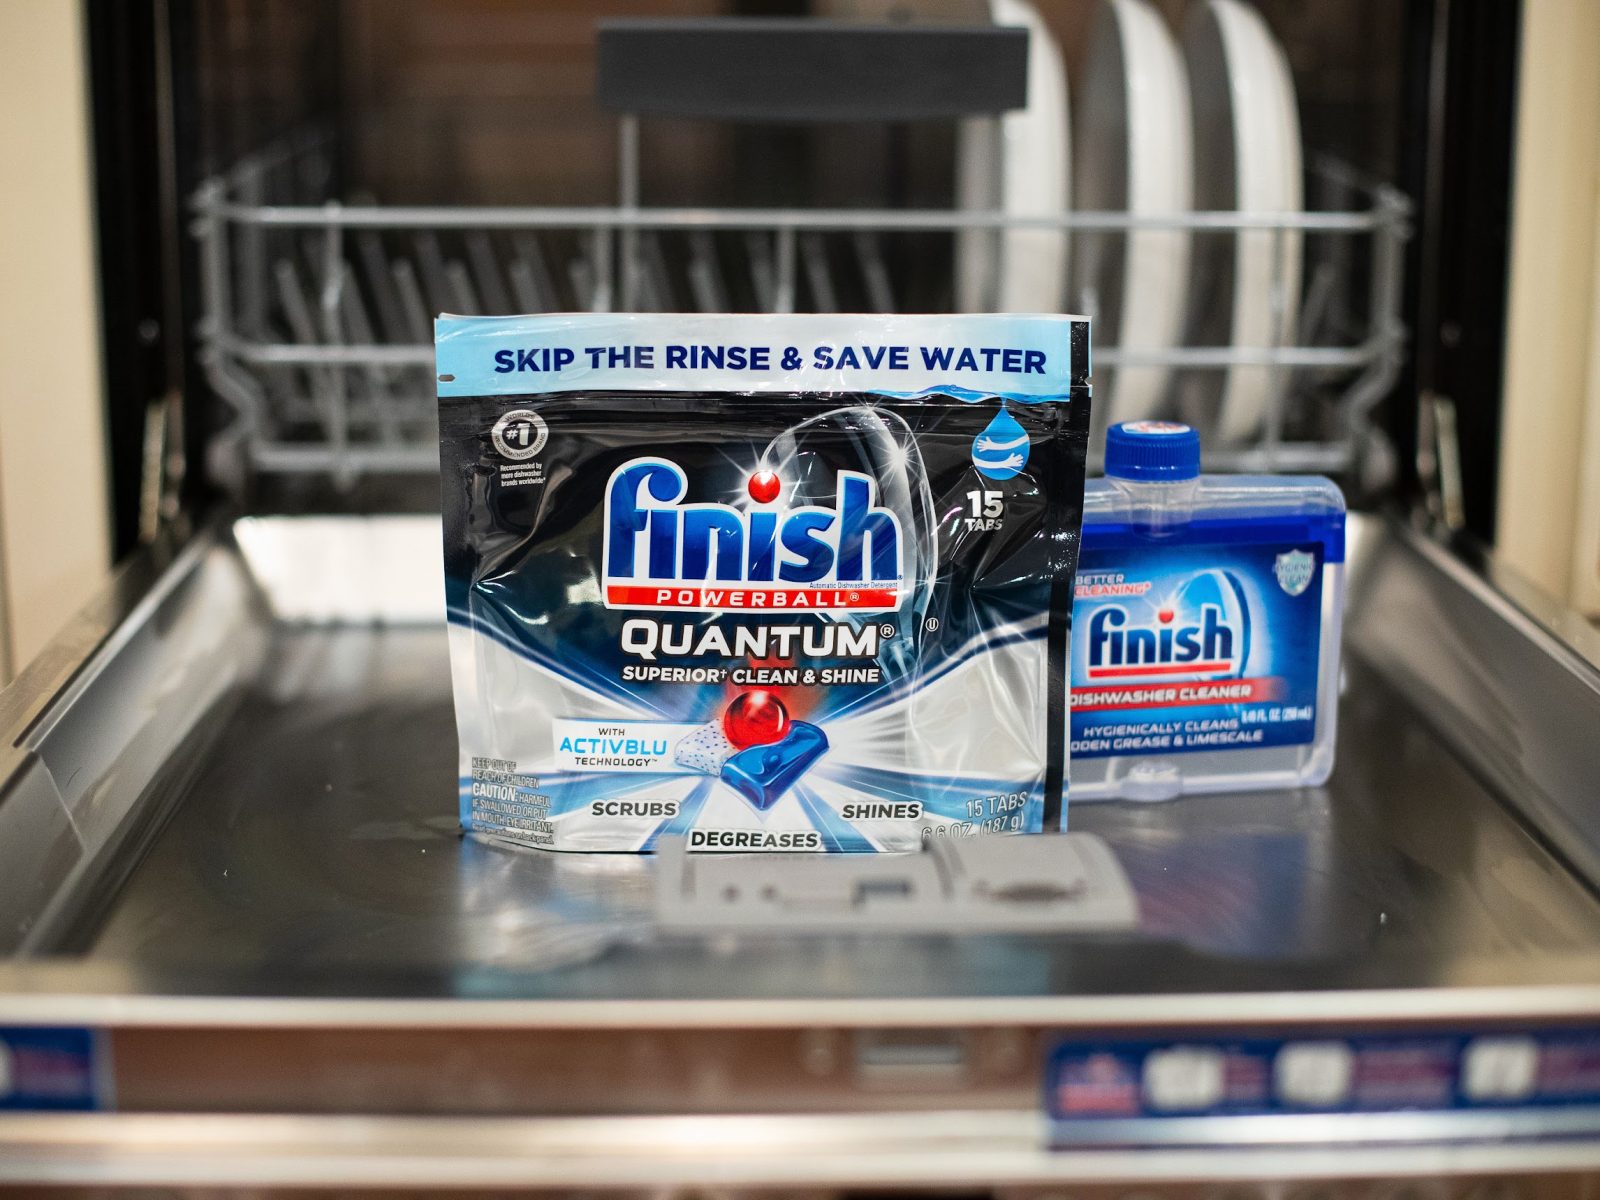 Finish Dishwasher Detergent As Low As $2.96 Per Bag At Publix (Regular Price $9.69)